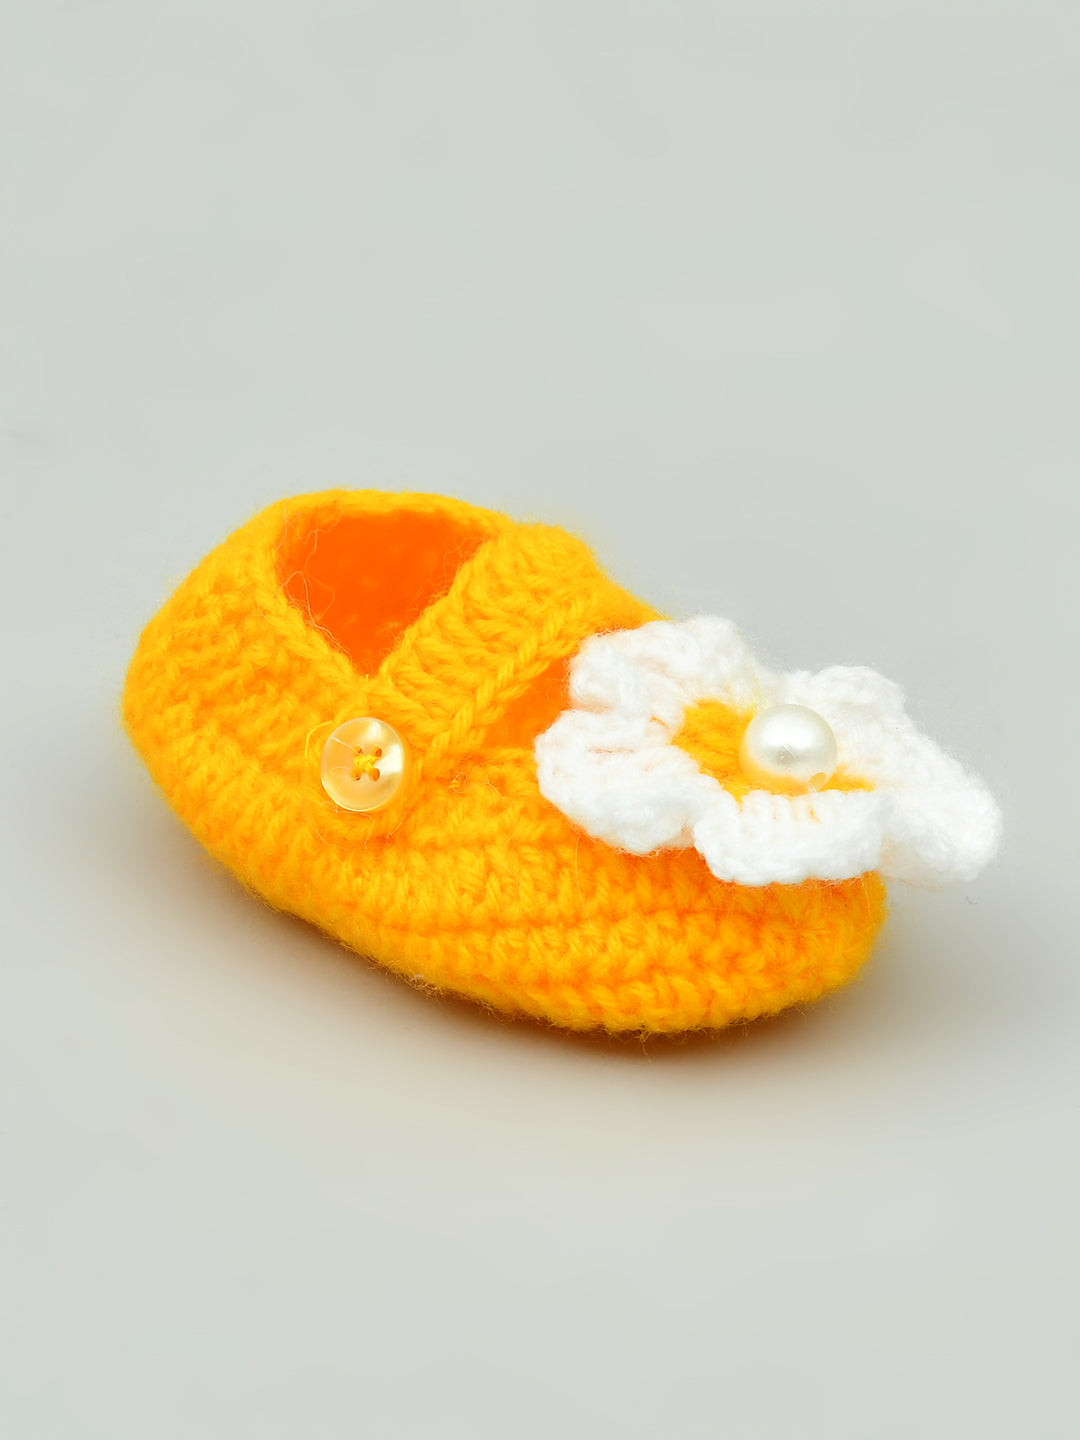 Peach & White Flowered Crochet Baby Booties for Girls